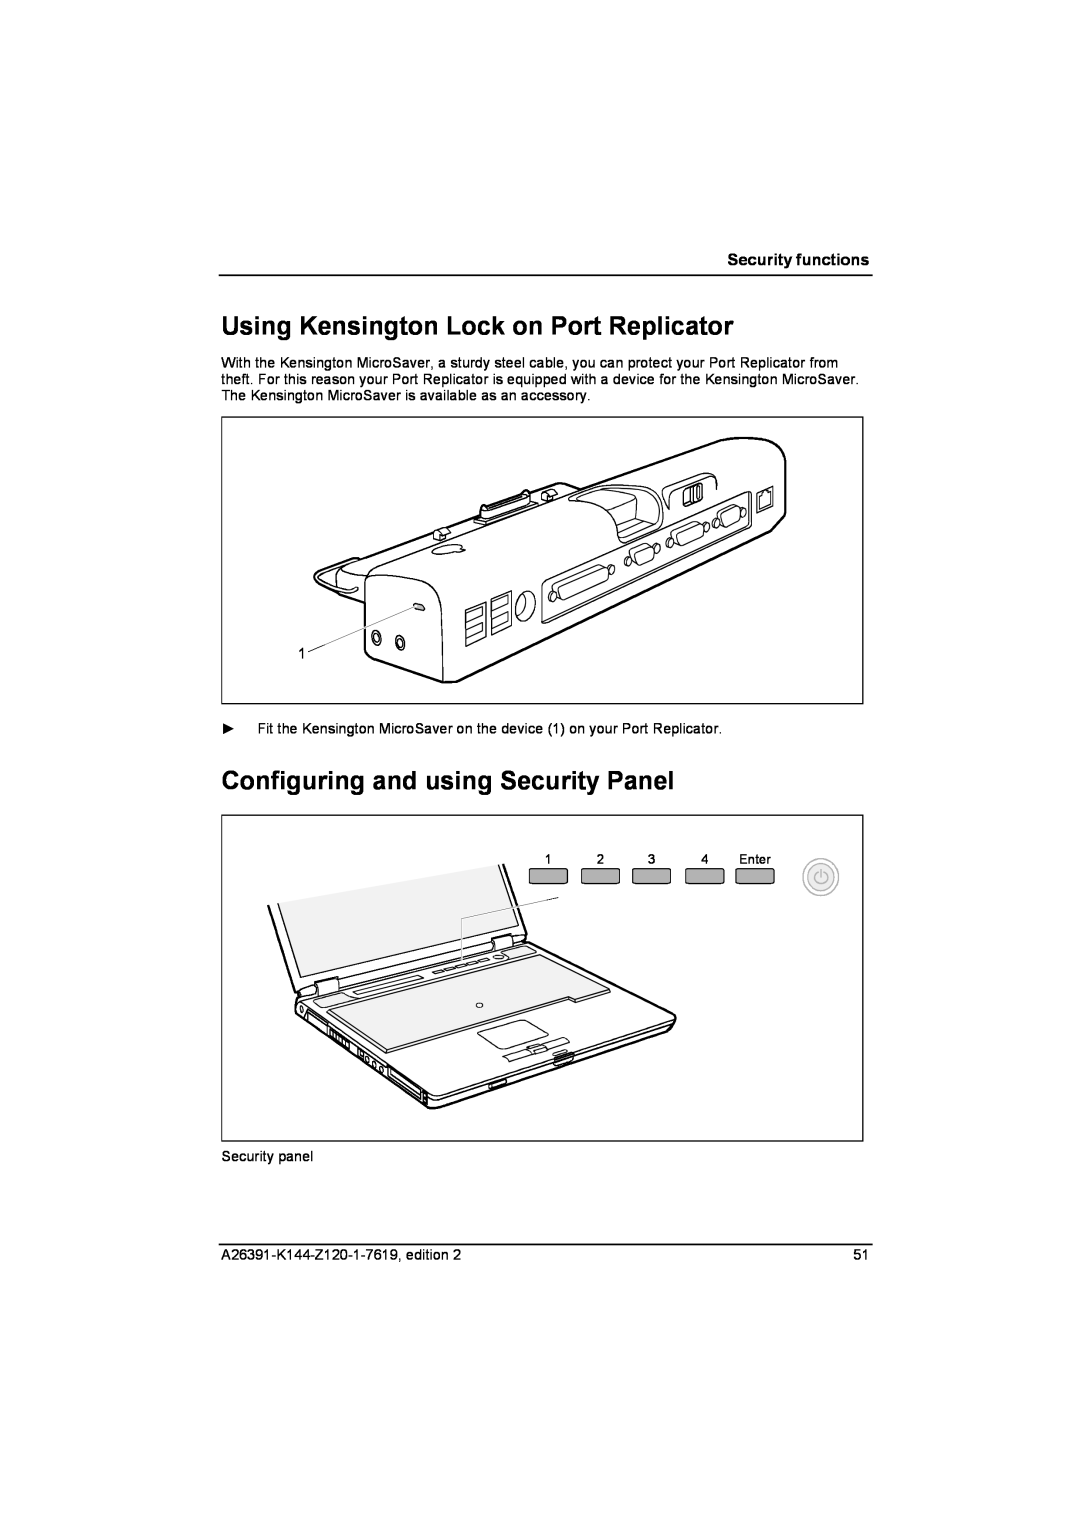 Fujitsu S SERIES Using Kensington Lock on Port Replicator, Configuring and using Security Panel, Security functions, Enter 